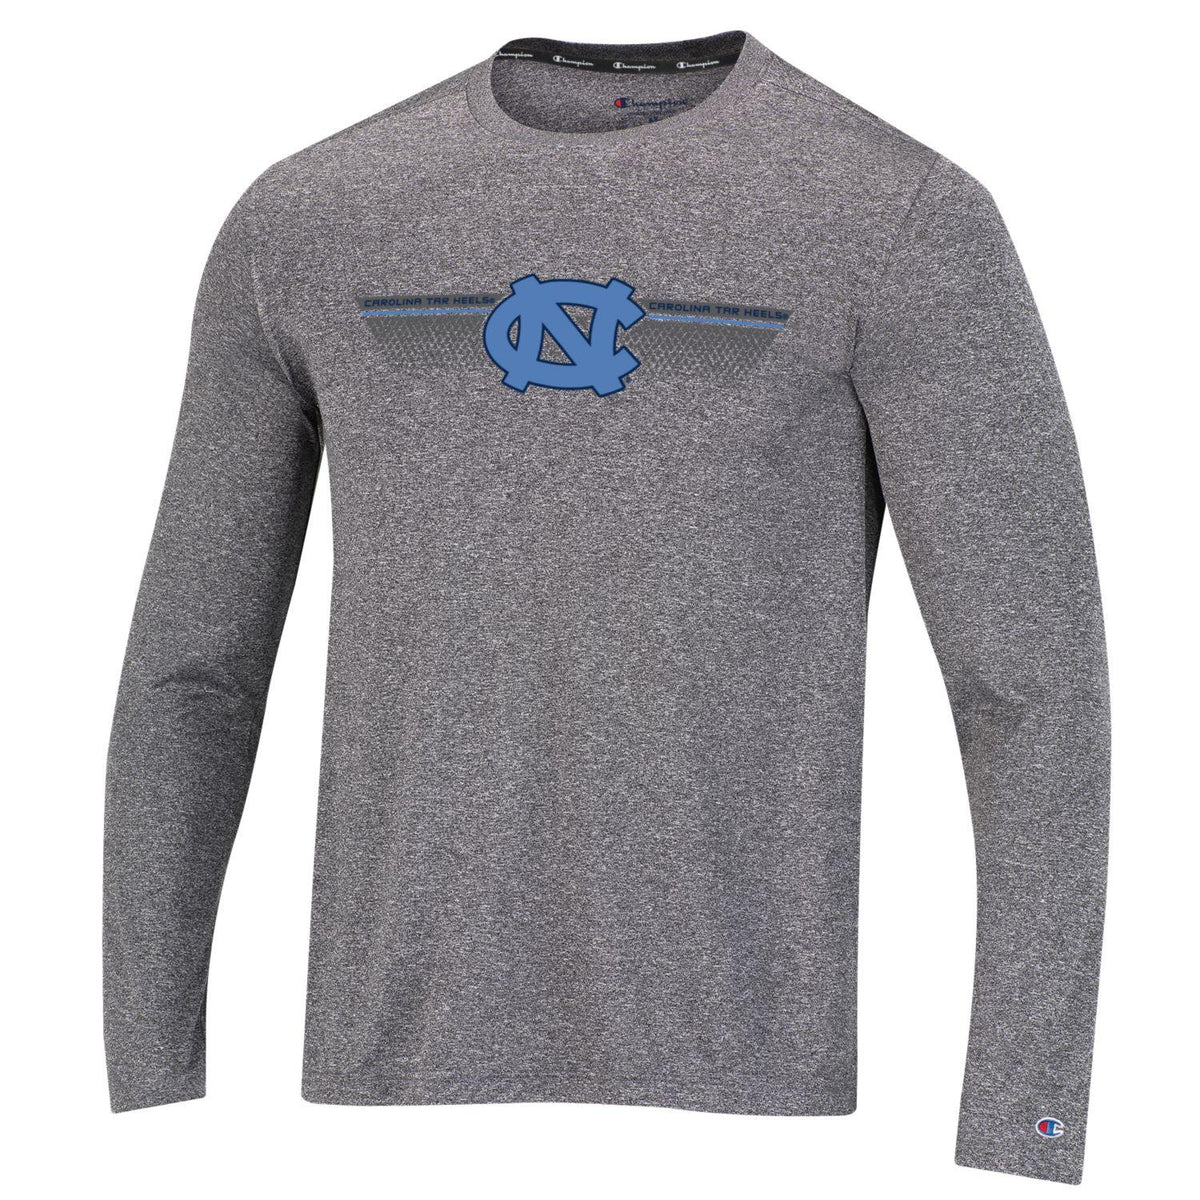 UNC Long Sleeve Dri-Fit Shirt